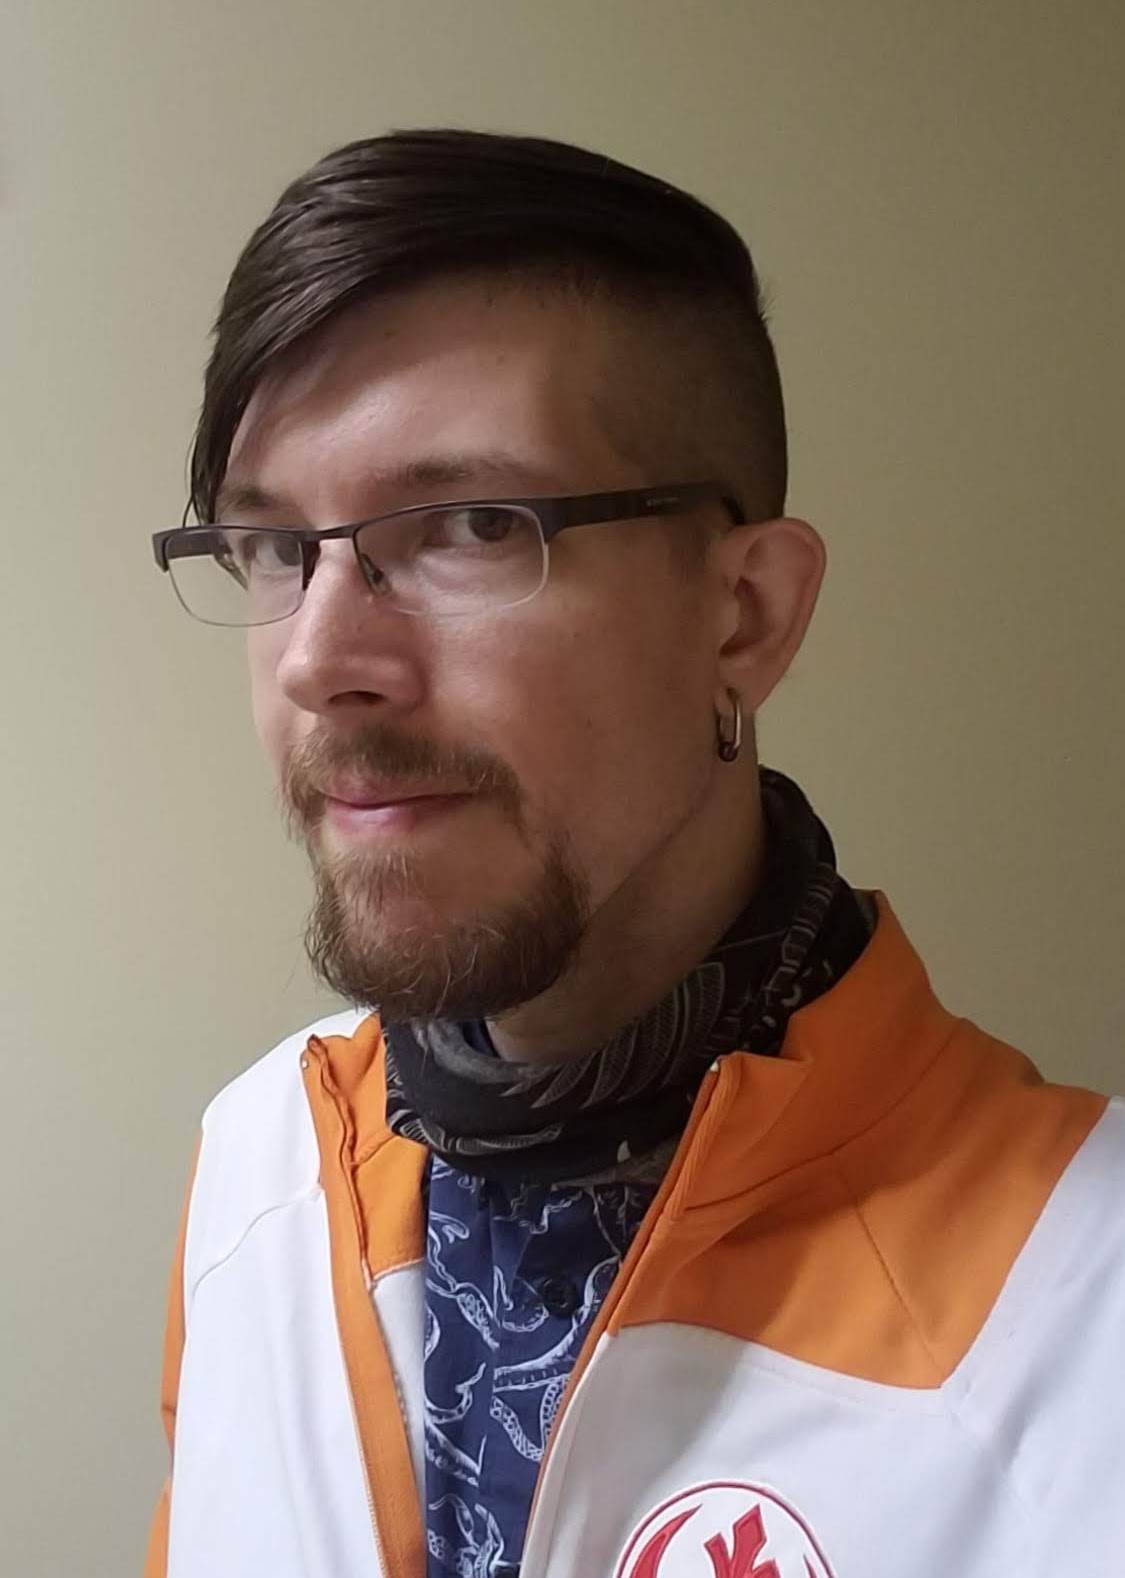 Image of the host wearing half-framed rectangular glasses, a blue shirt, and an orange Rebel Alliance jacket.